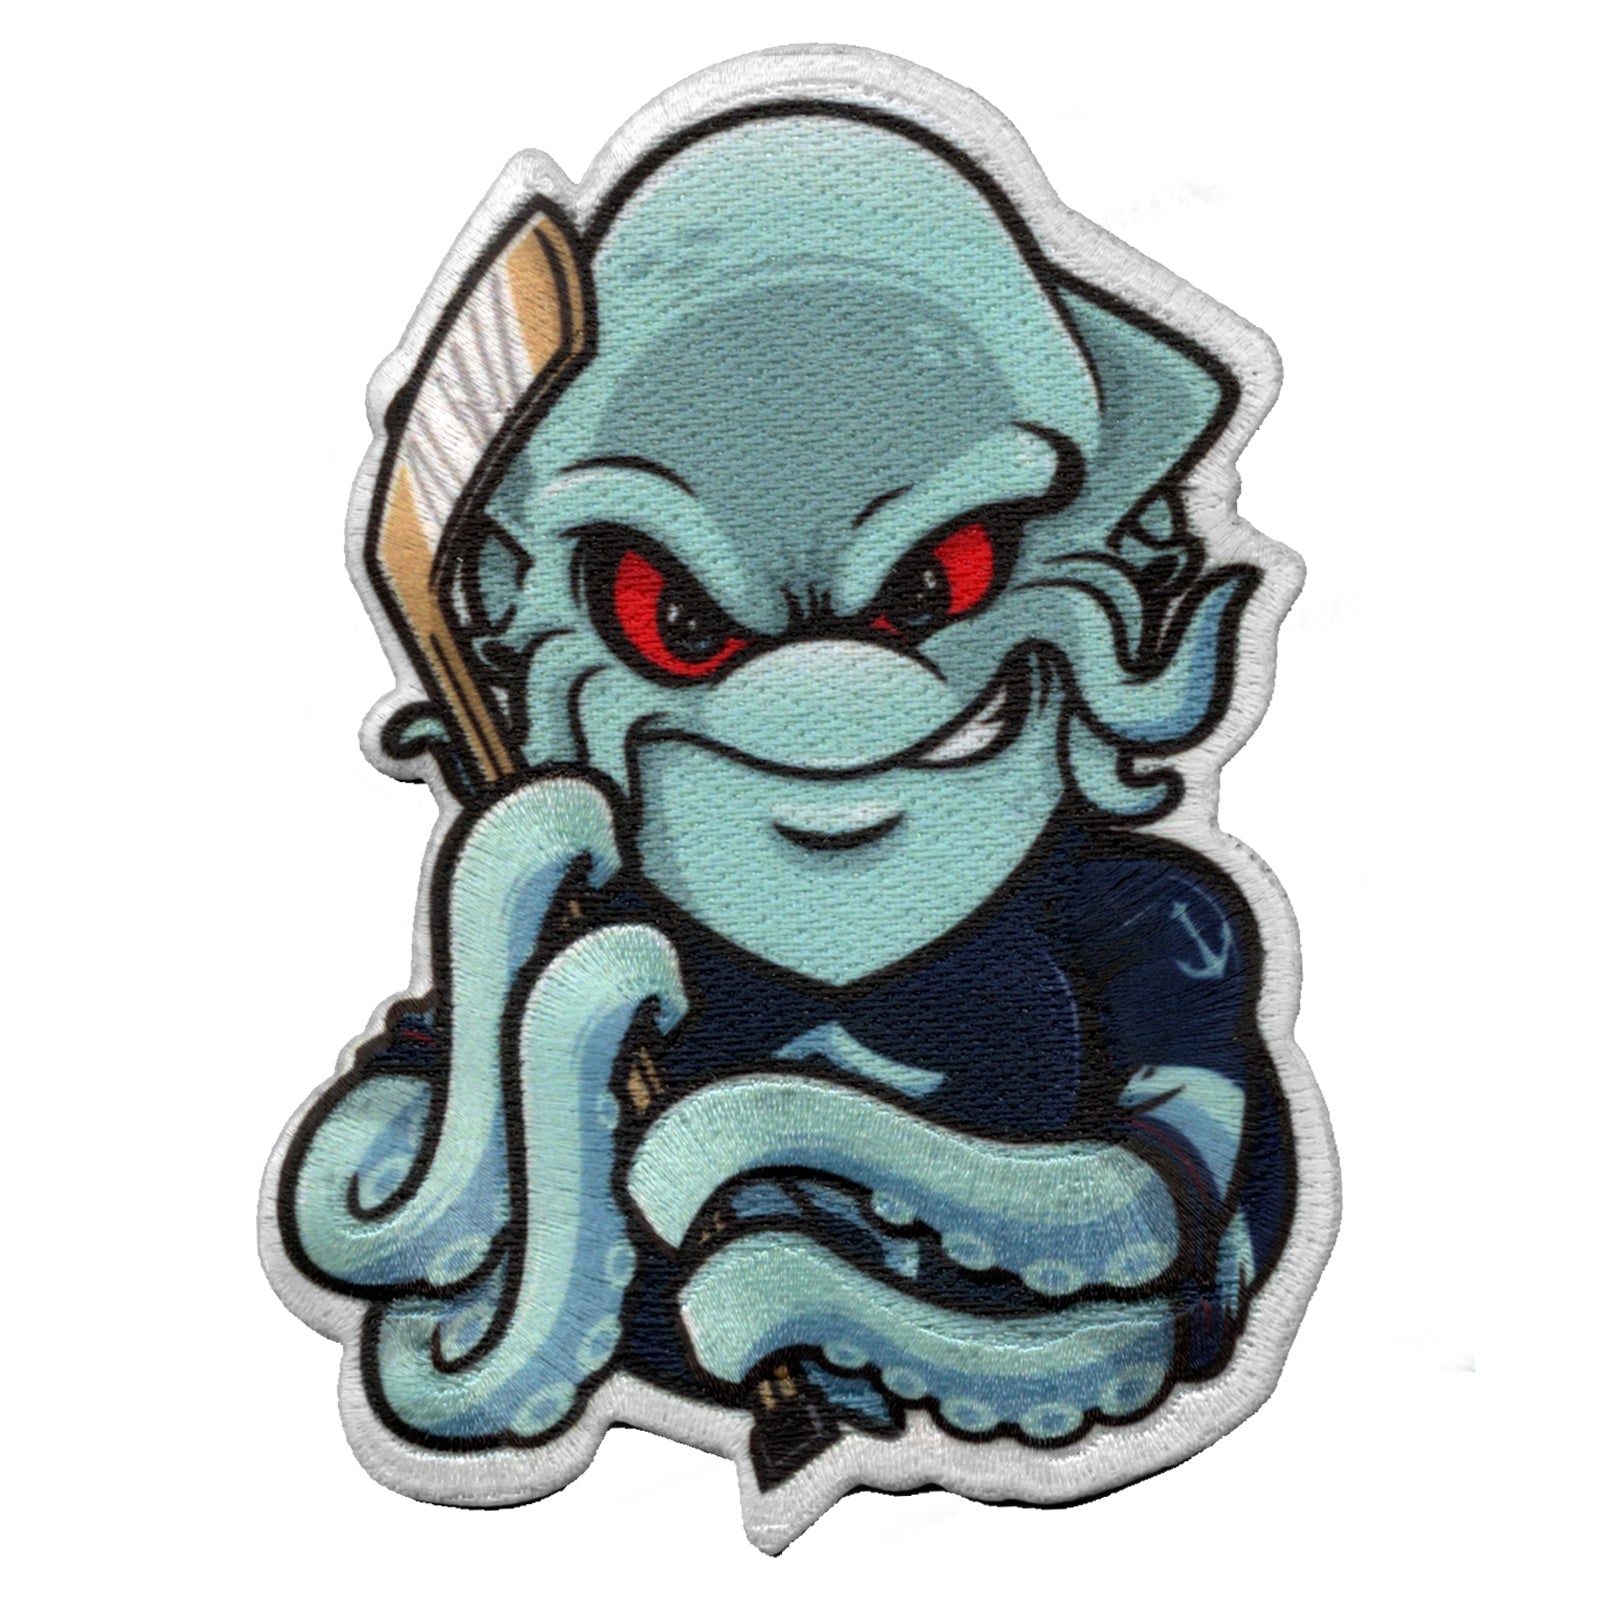 seattle kraken mascot